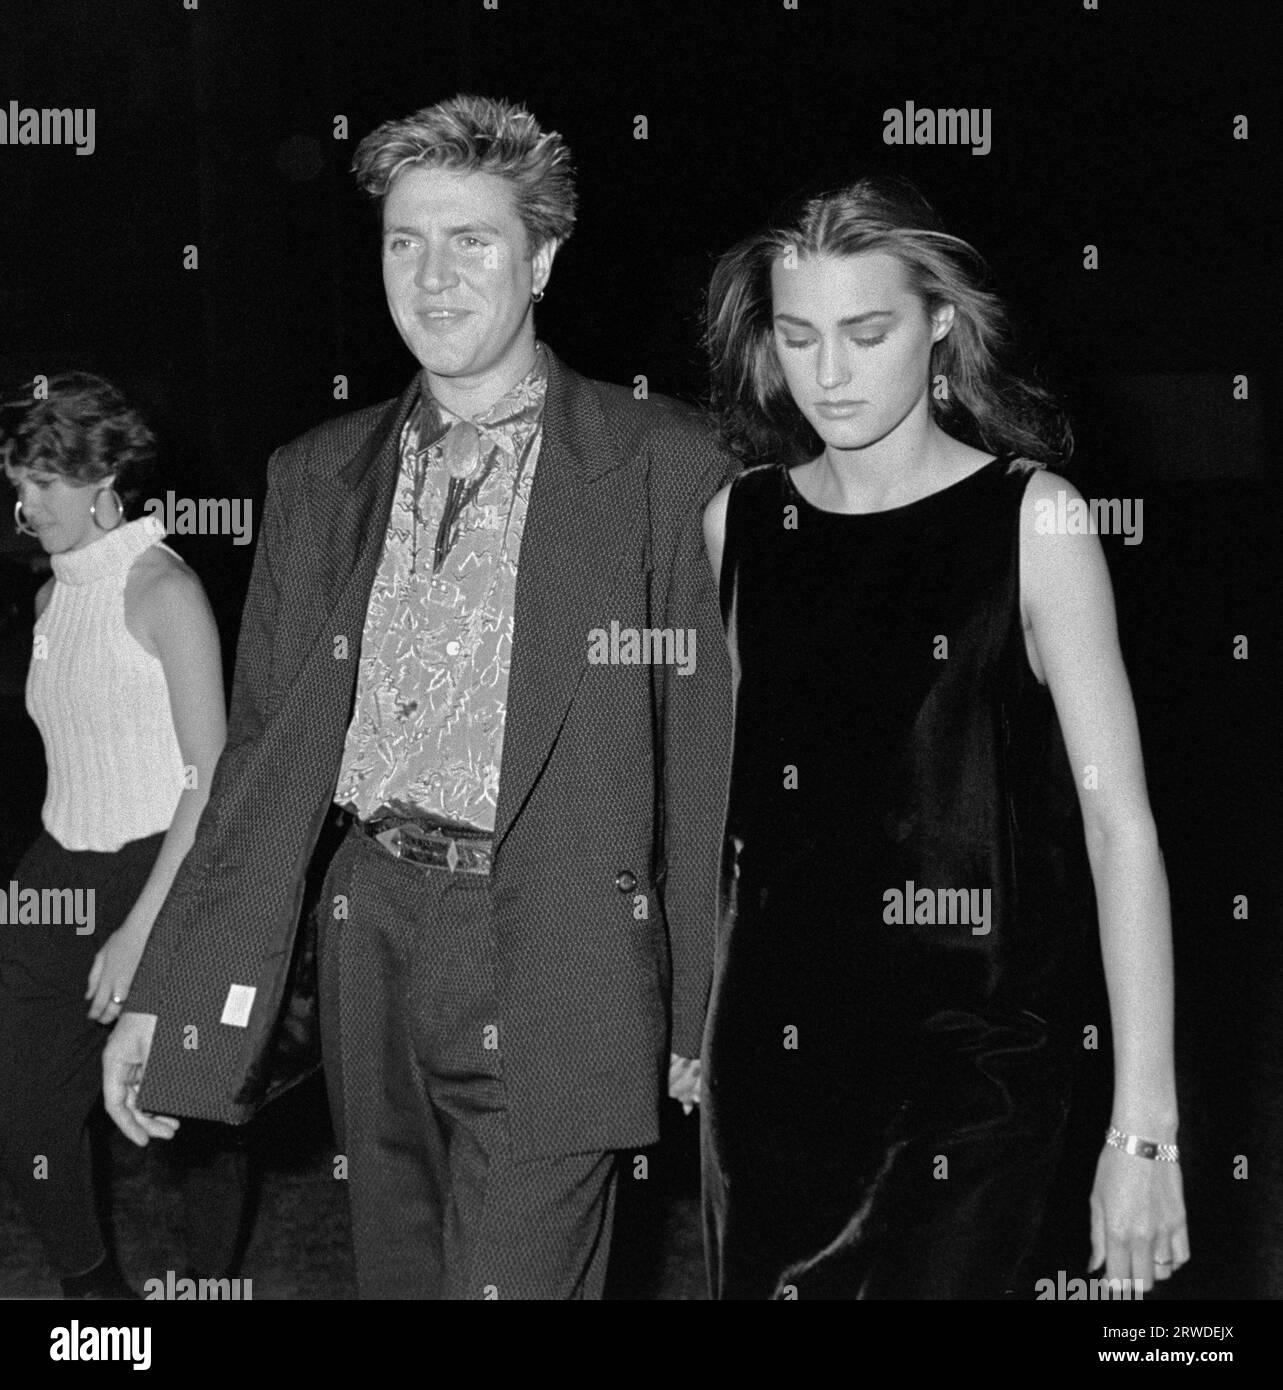 LONDON, GROSSBRITANNIEN. c.1986: Duran Duran-Star Simon Le Bon und Ehefrau Yasmin Le Bon verlassen eine Party in London. Datei Foto © Paul Smith/Featureflash Stockfoto